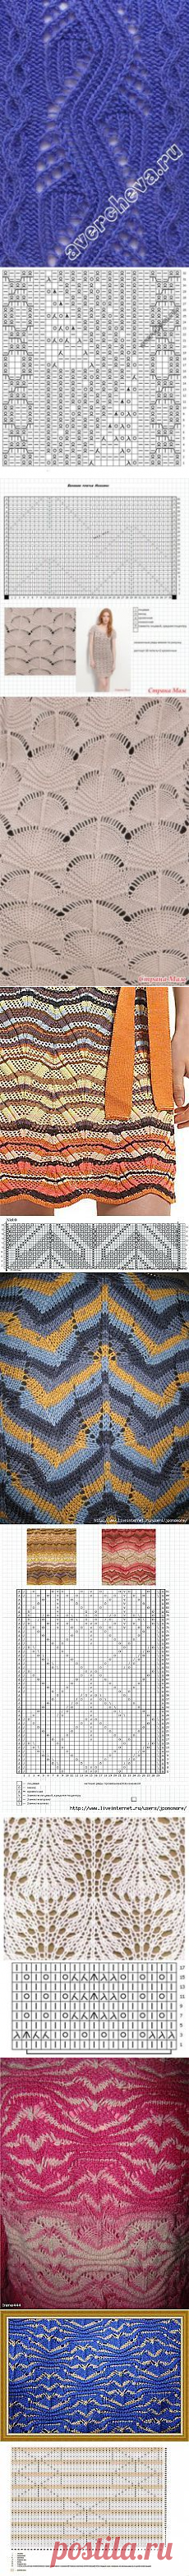 (80) Stitch Patterns в Pinterest